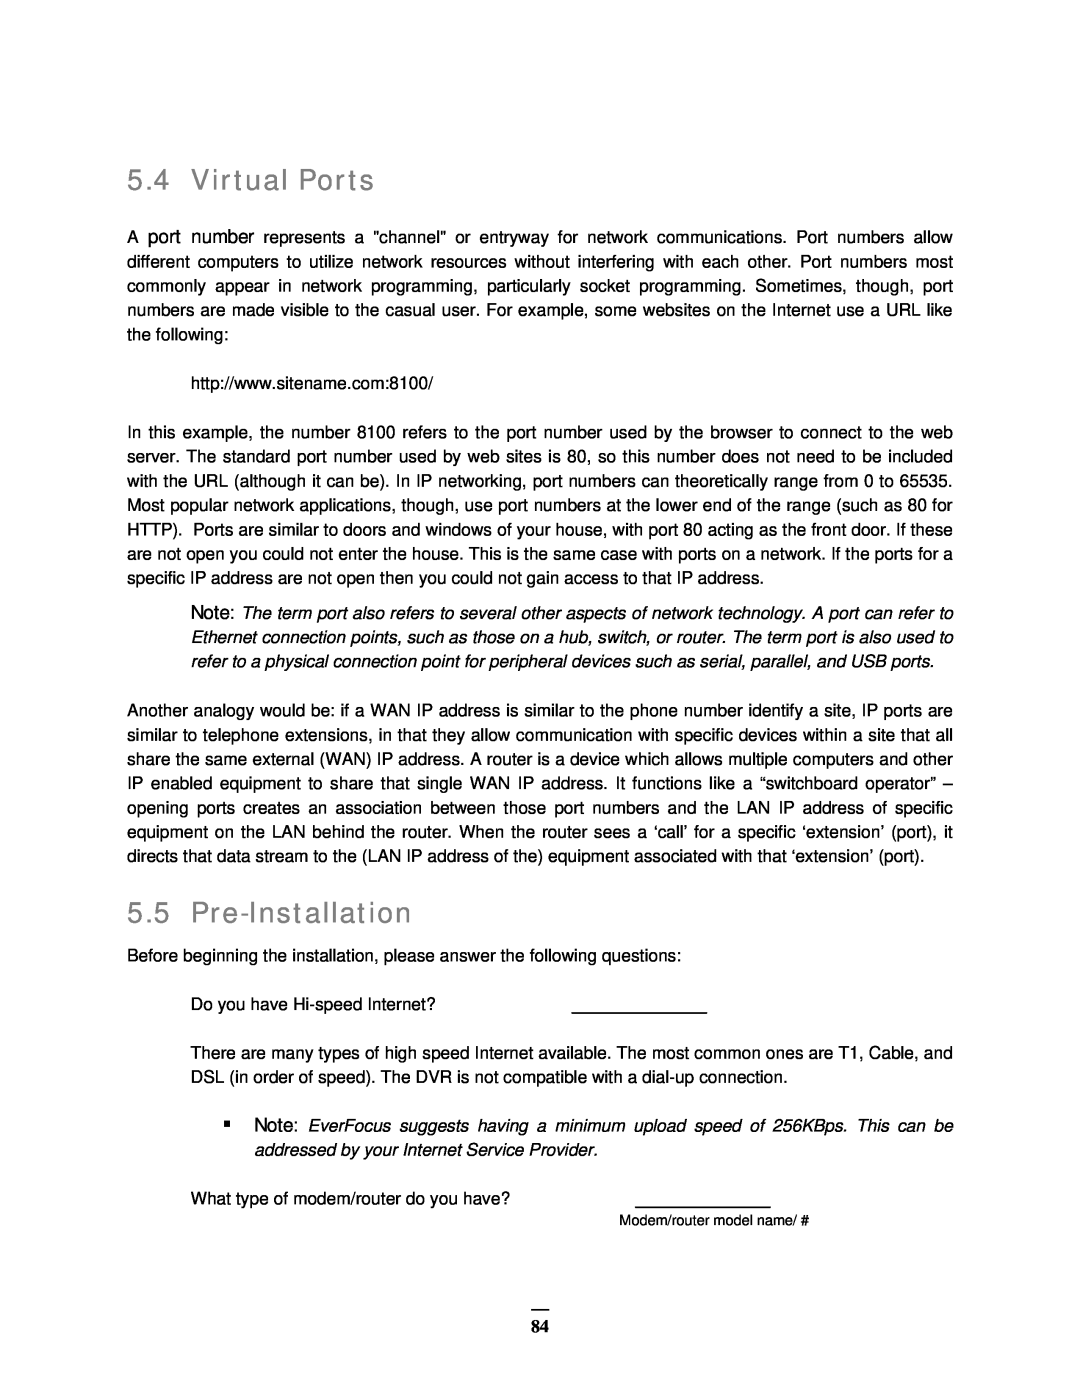 EverFocus EMV400 user manual Virtual Ports, Pre-Installation 